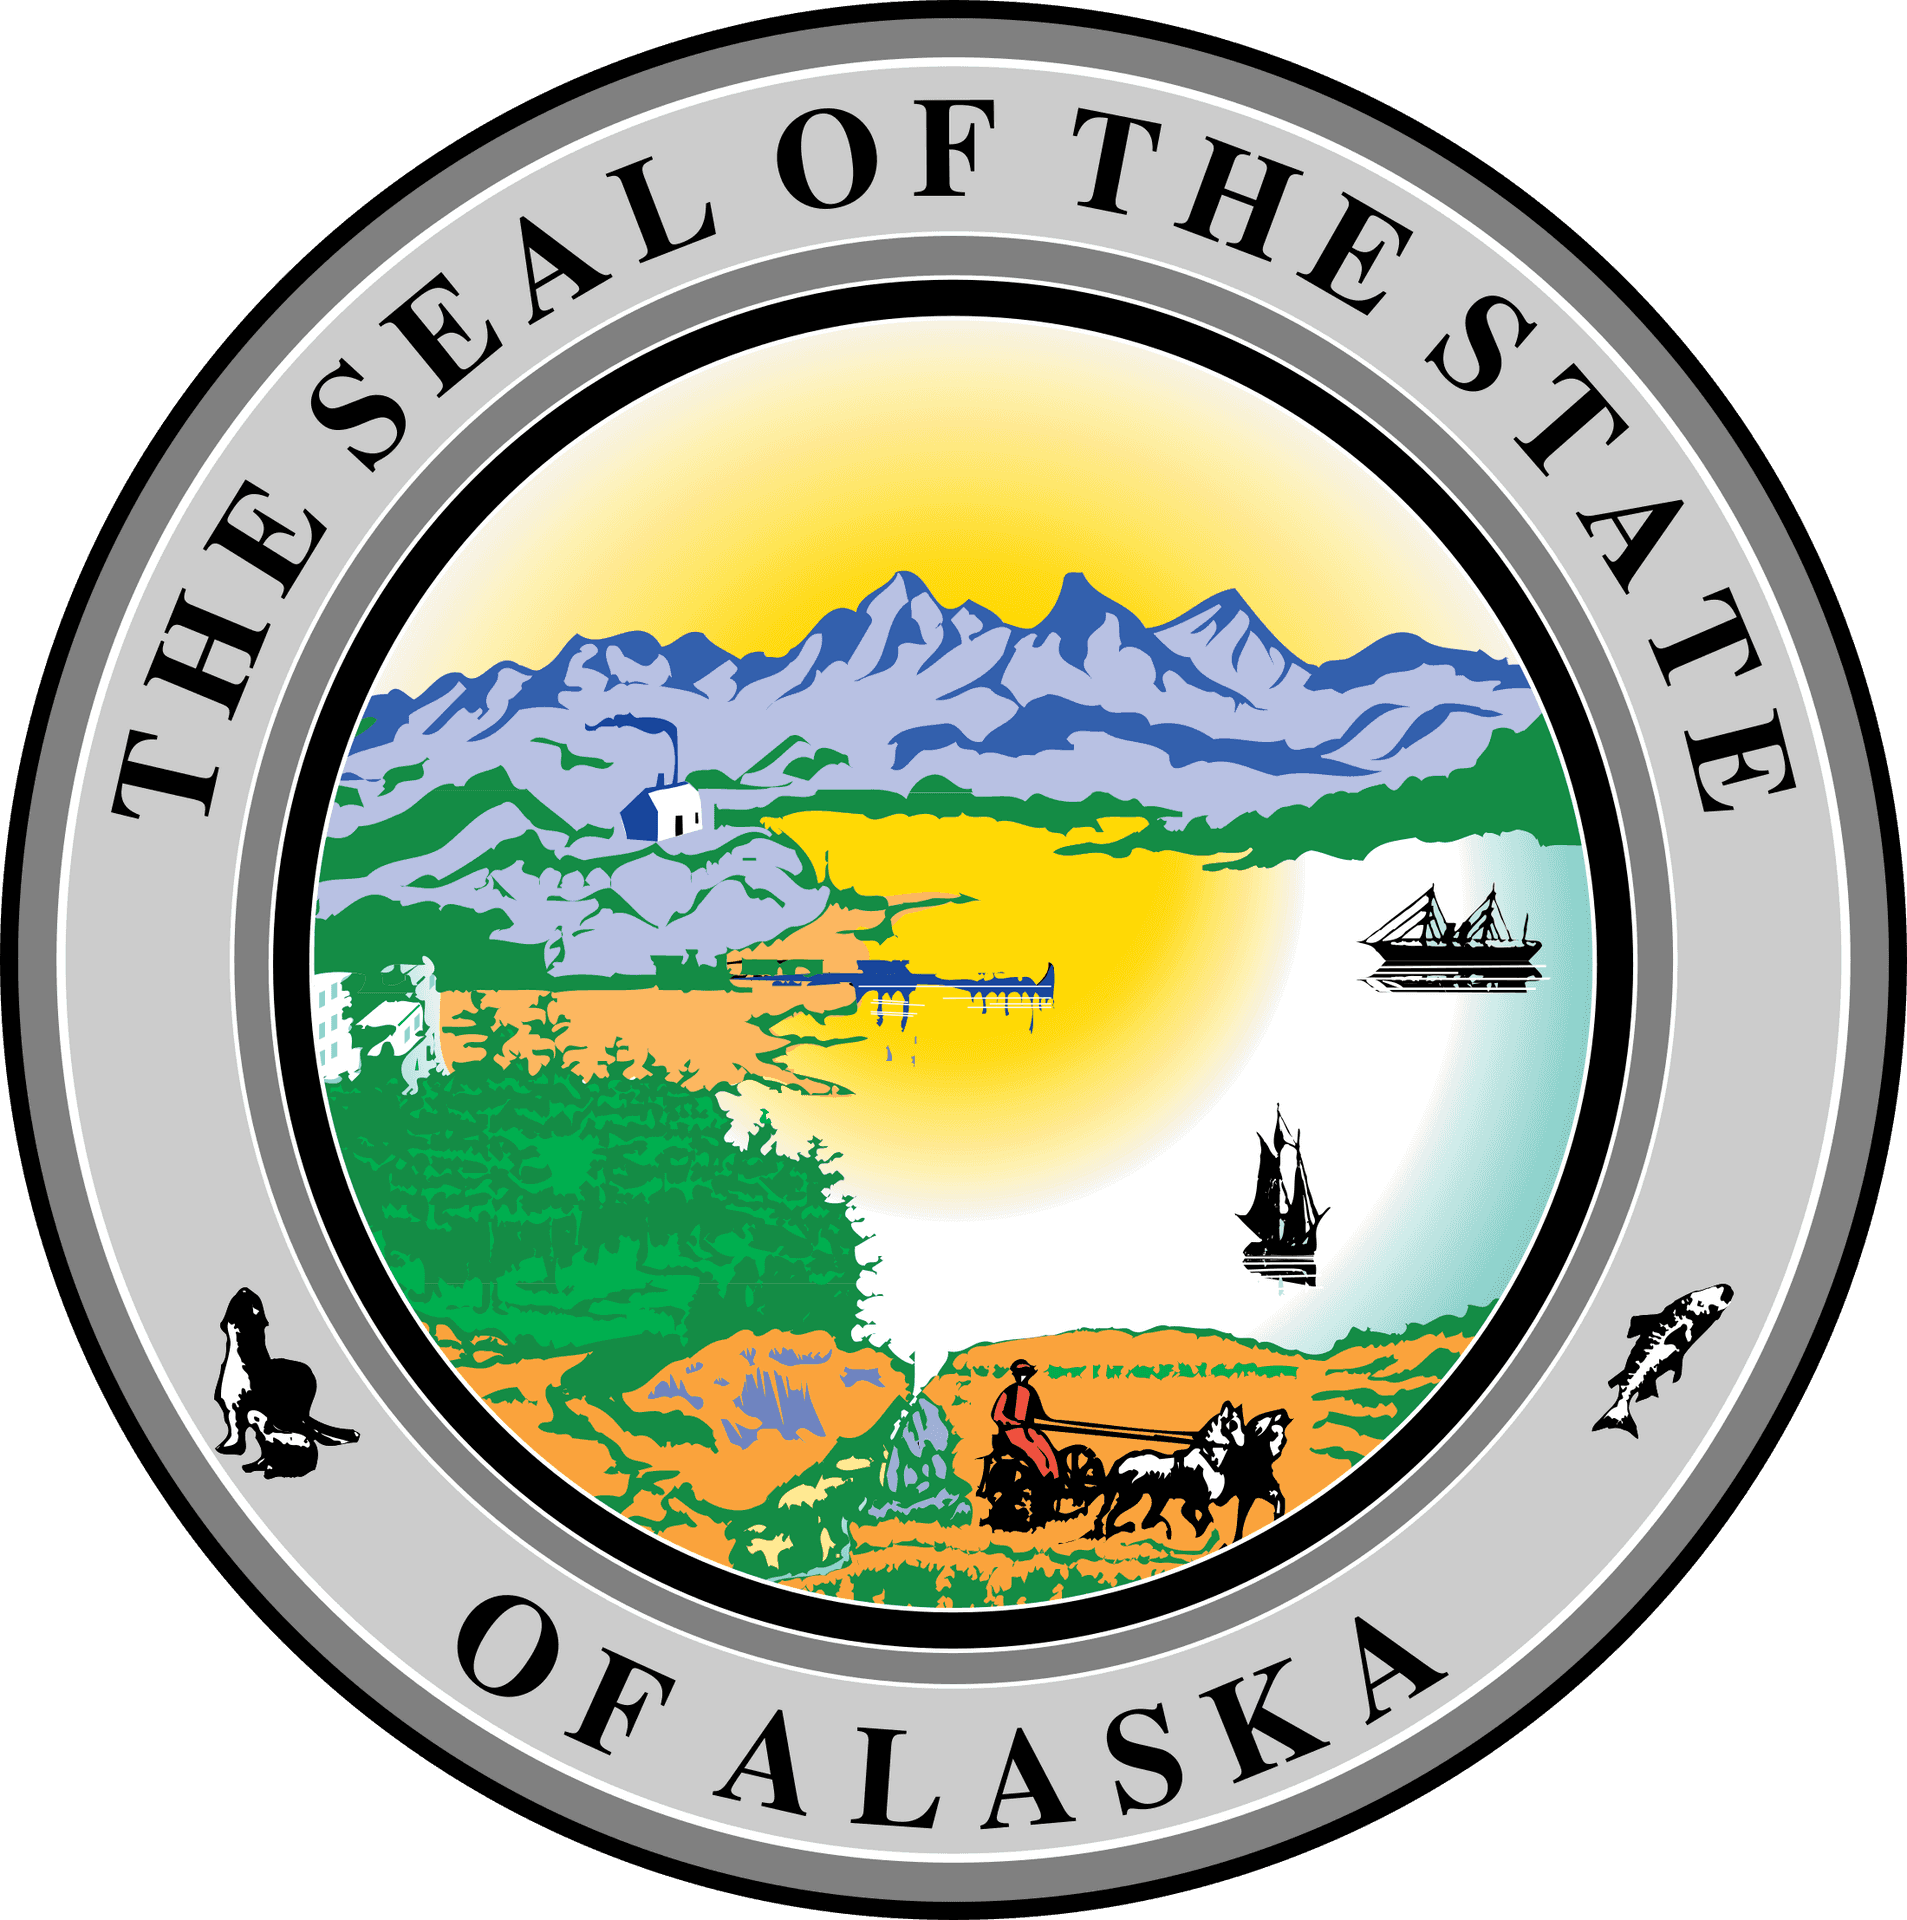 Alaska State Seal PNG image